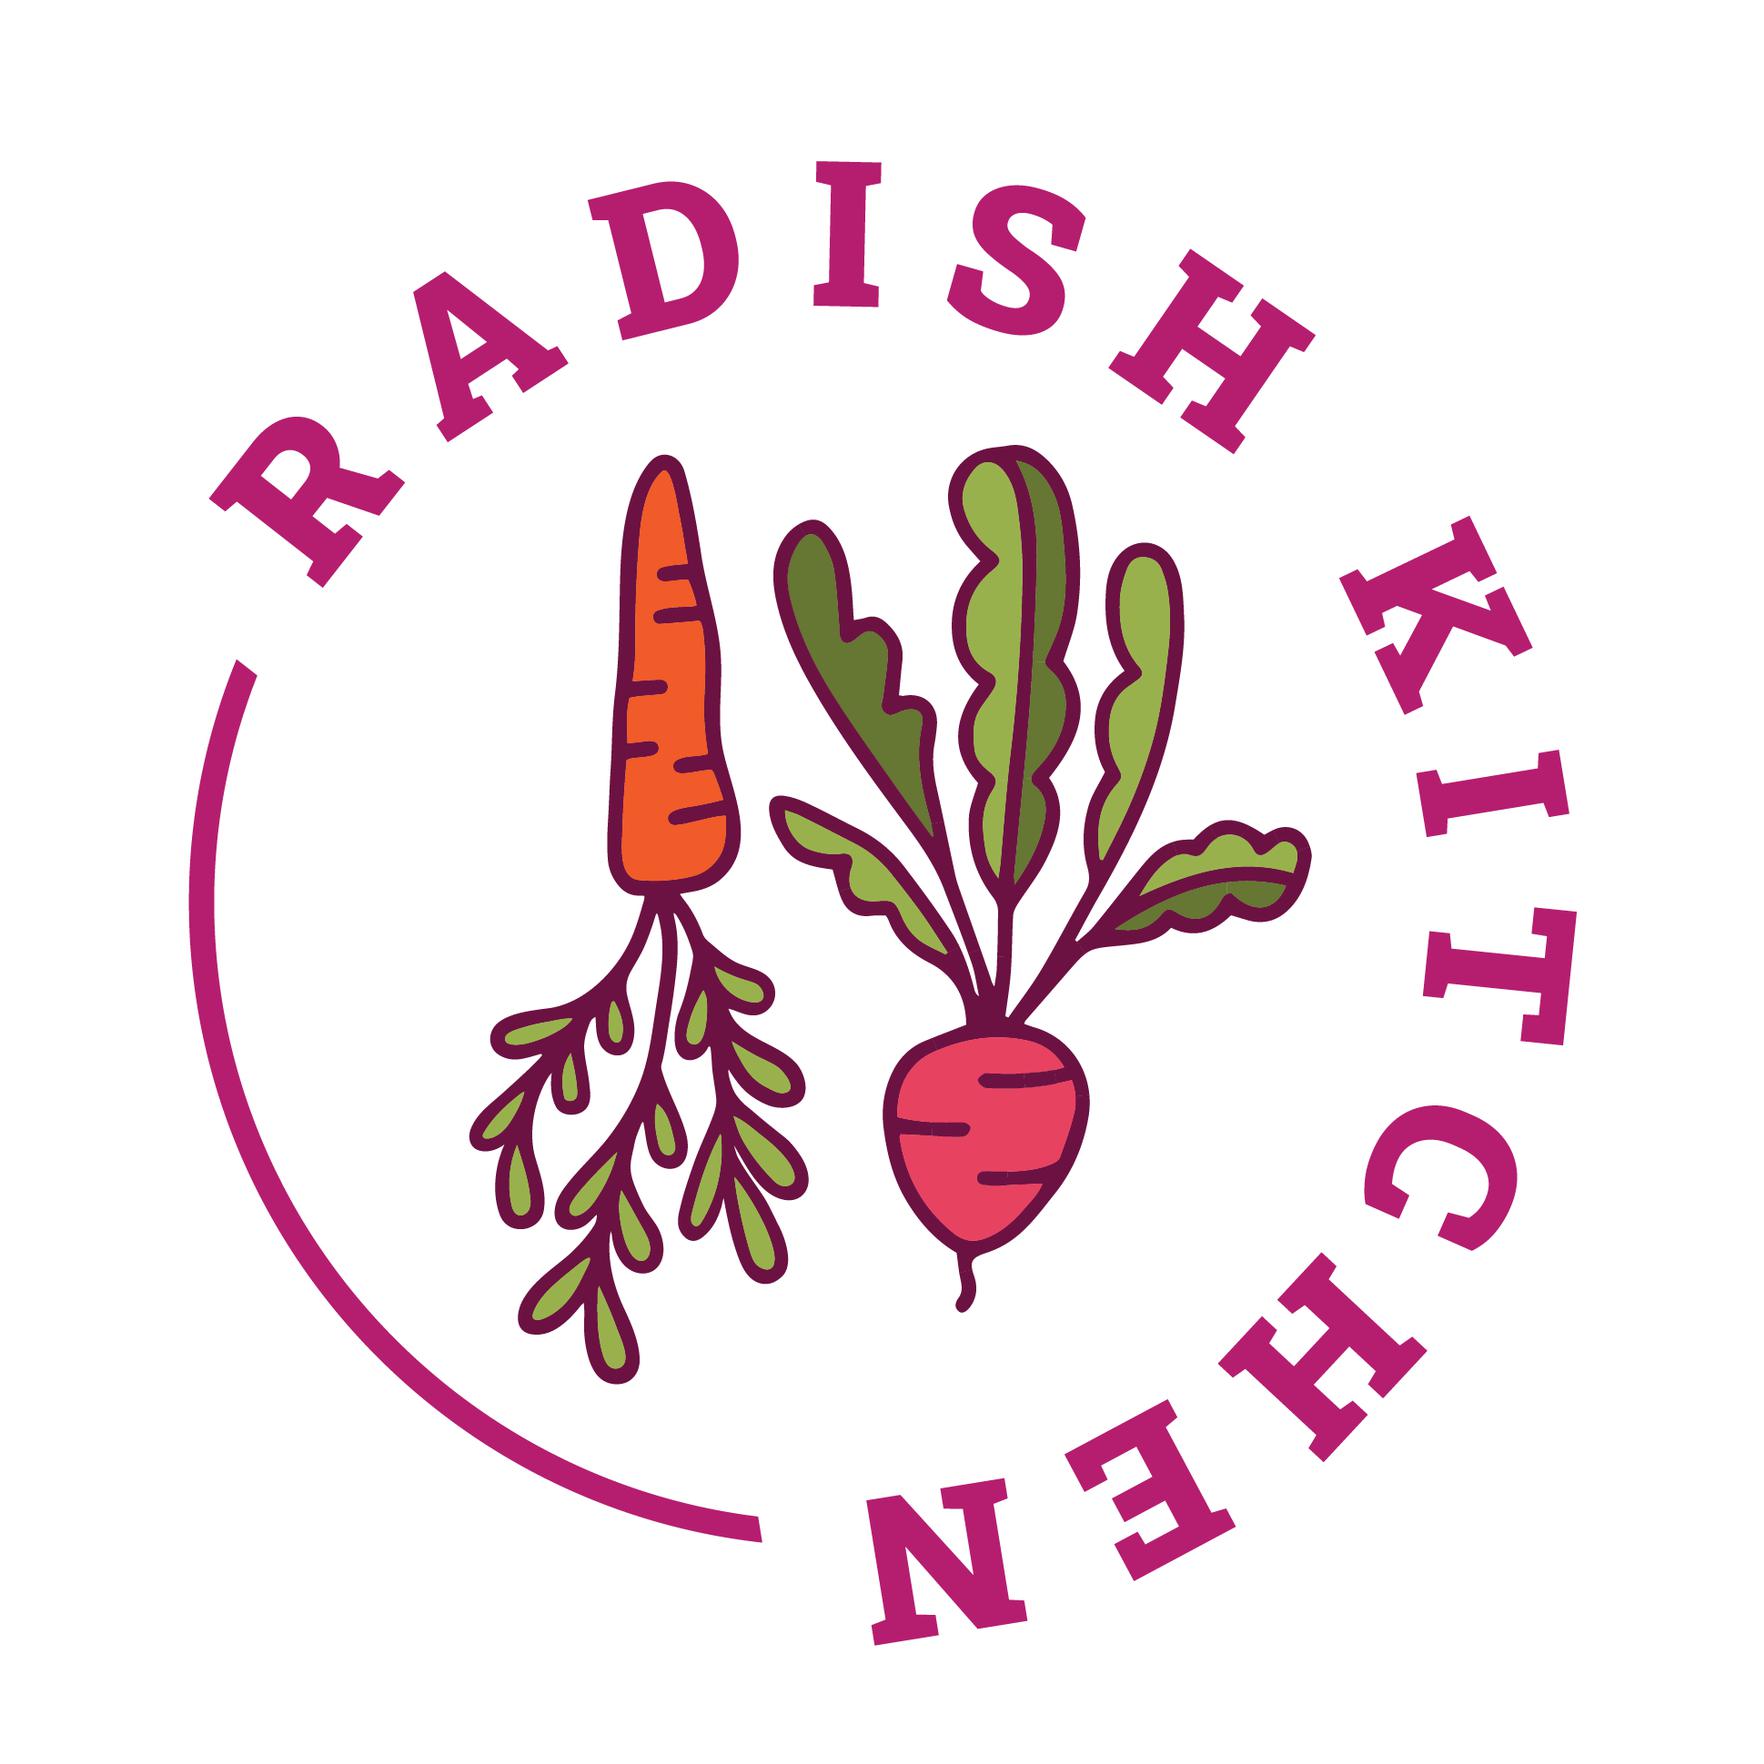 Radish Kitchen